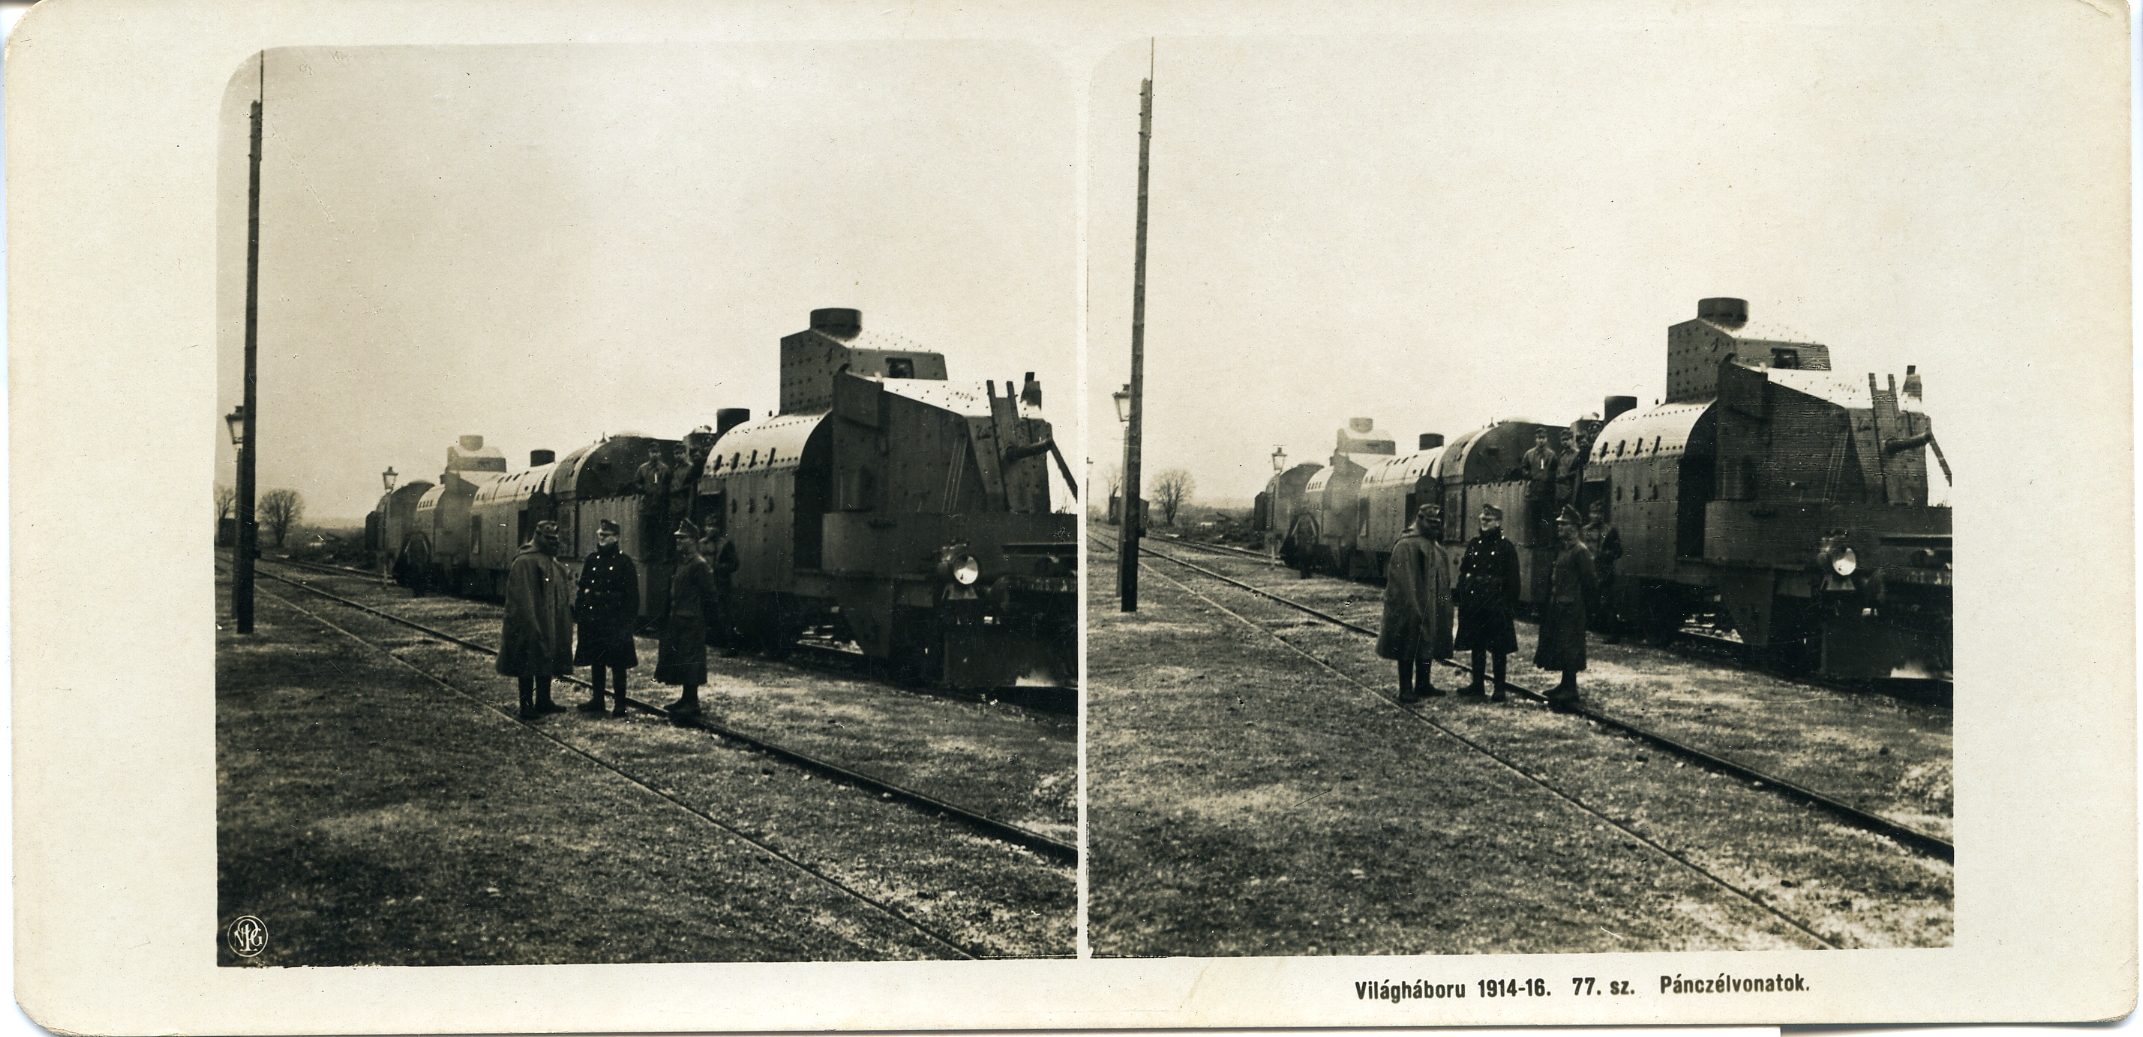 "Pánczélvonatok" - Armoured train